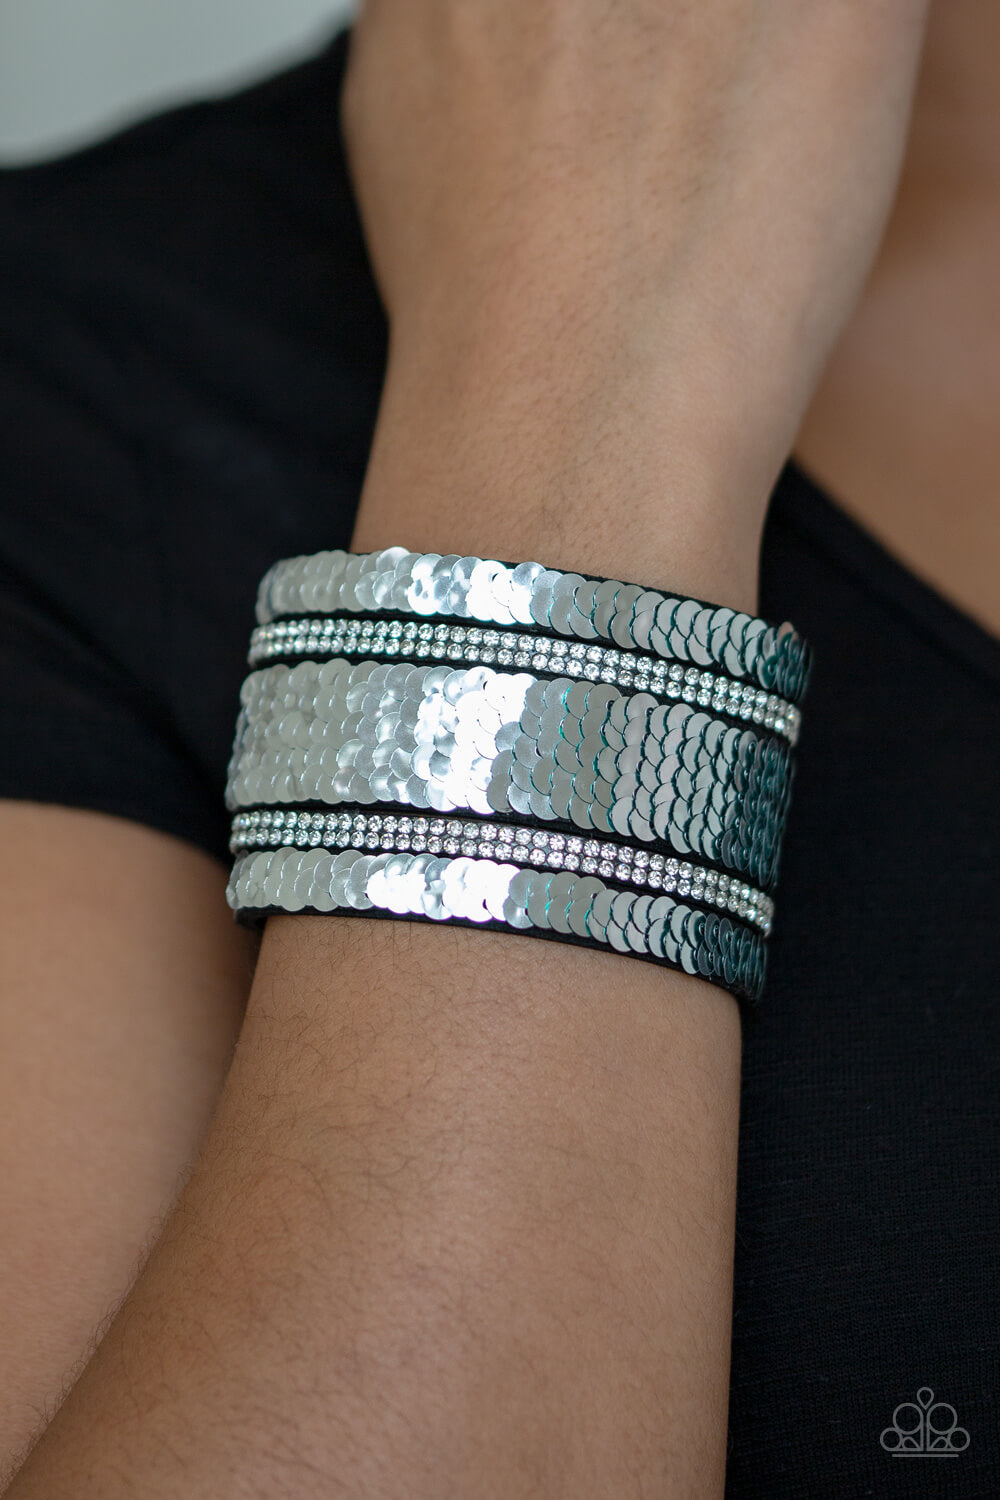 MERMAID Service -Green and Silver Snap Wrap Reversible Bracelet - Princess Glam Shop